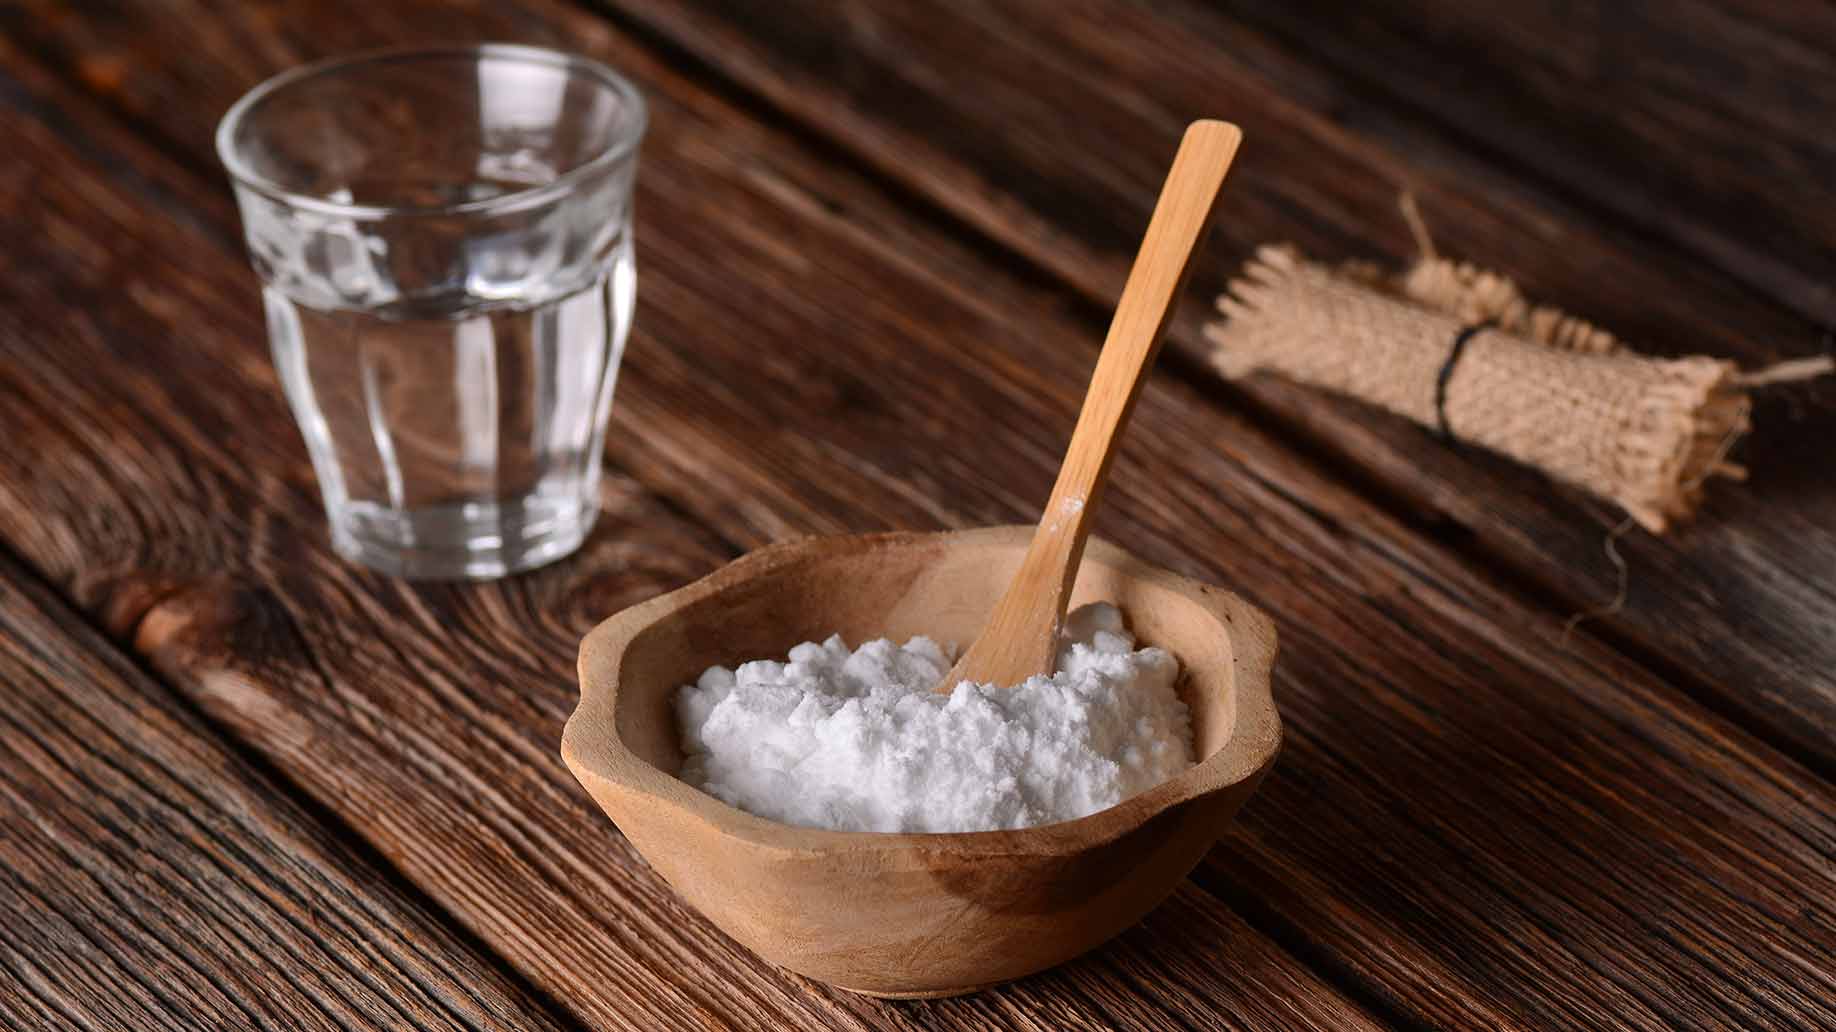 baking soda filtered water detox bath removes toxins naturally